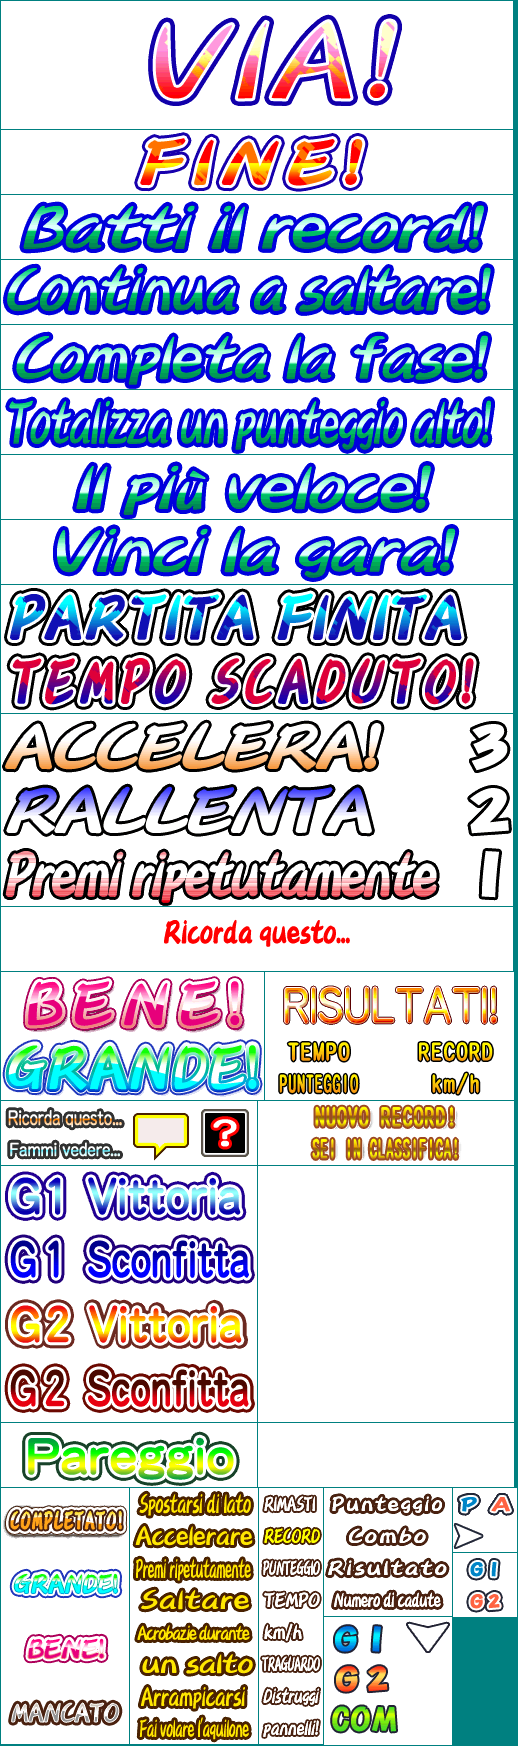 Active Life: Extreme Challenge / Family Trainer: Extreme Challenge - Text (Italian)